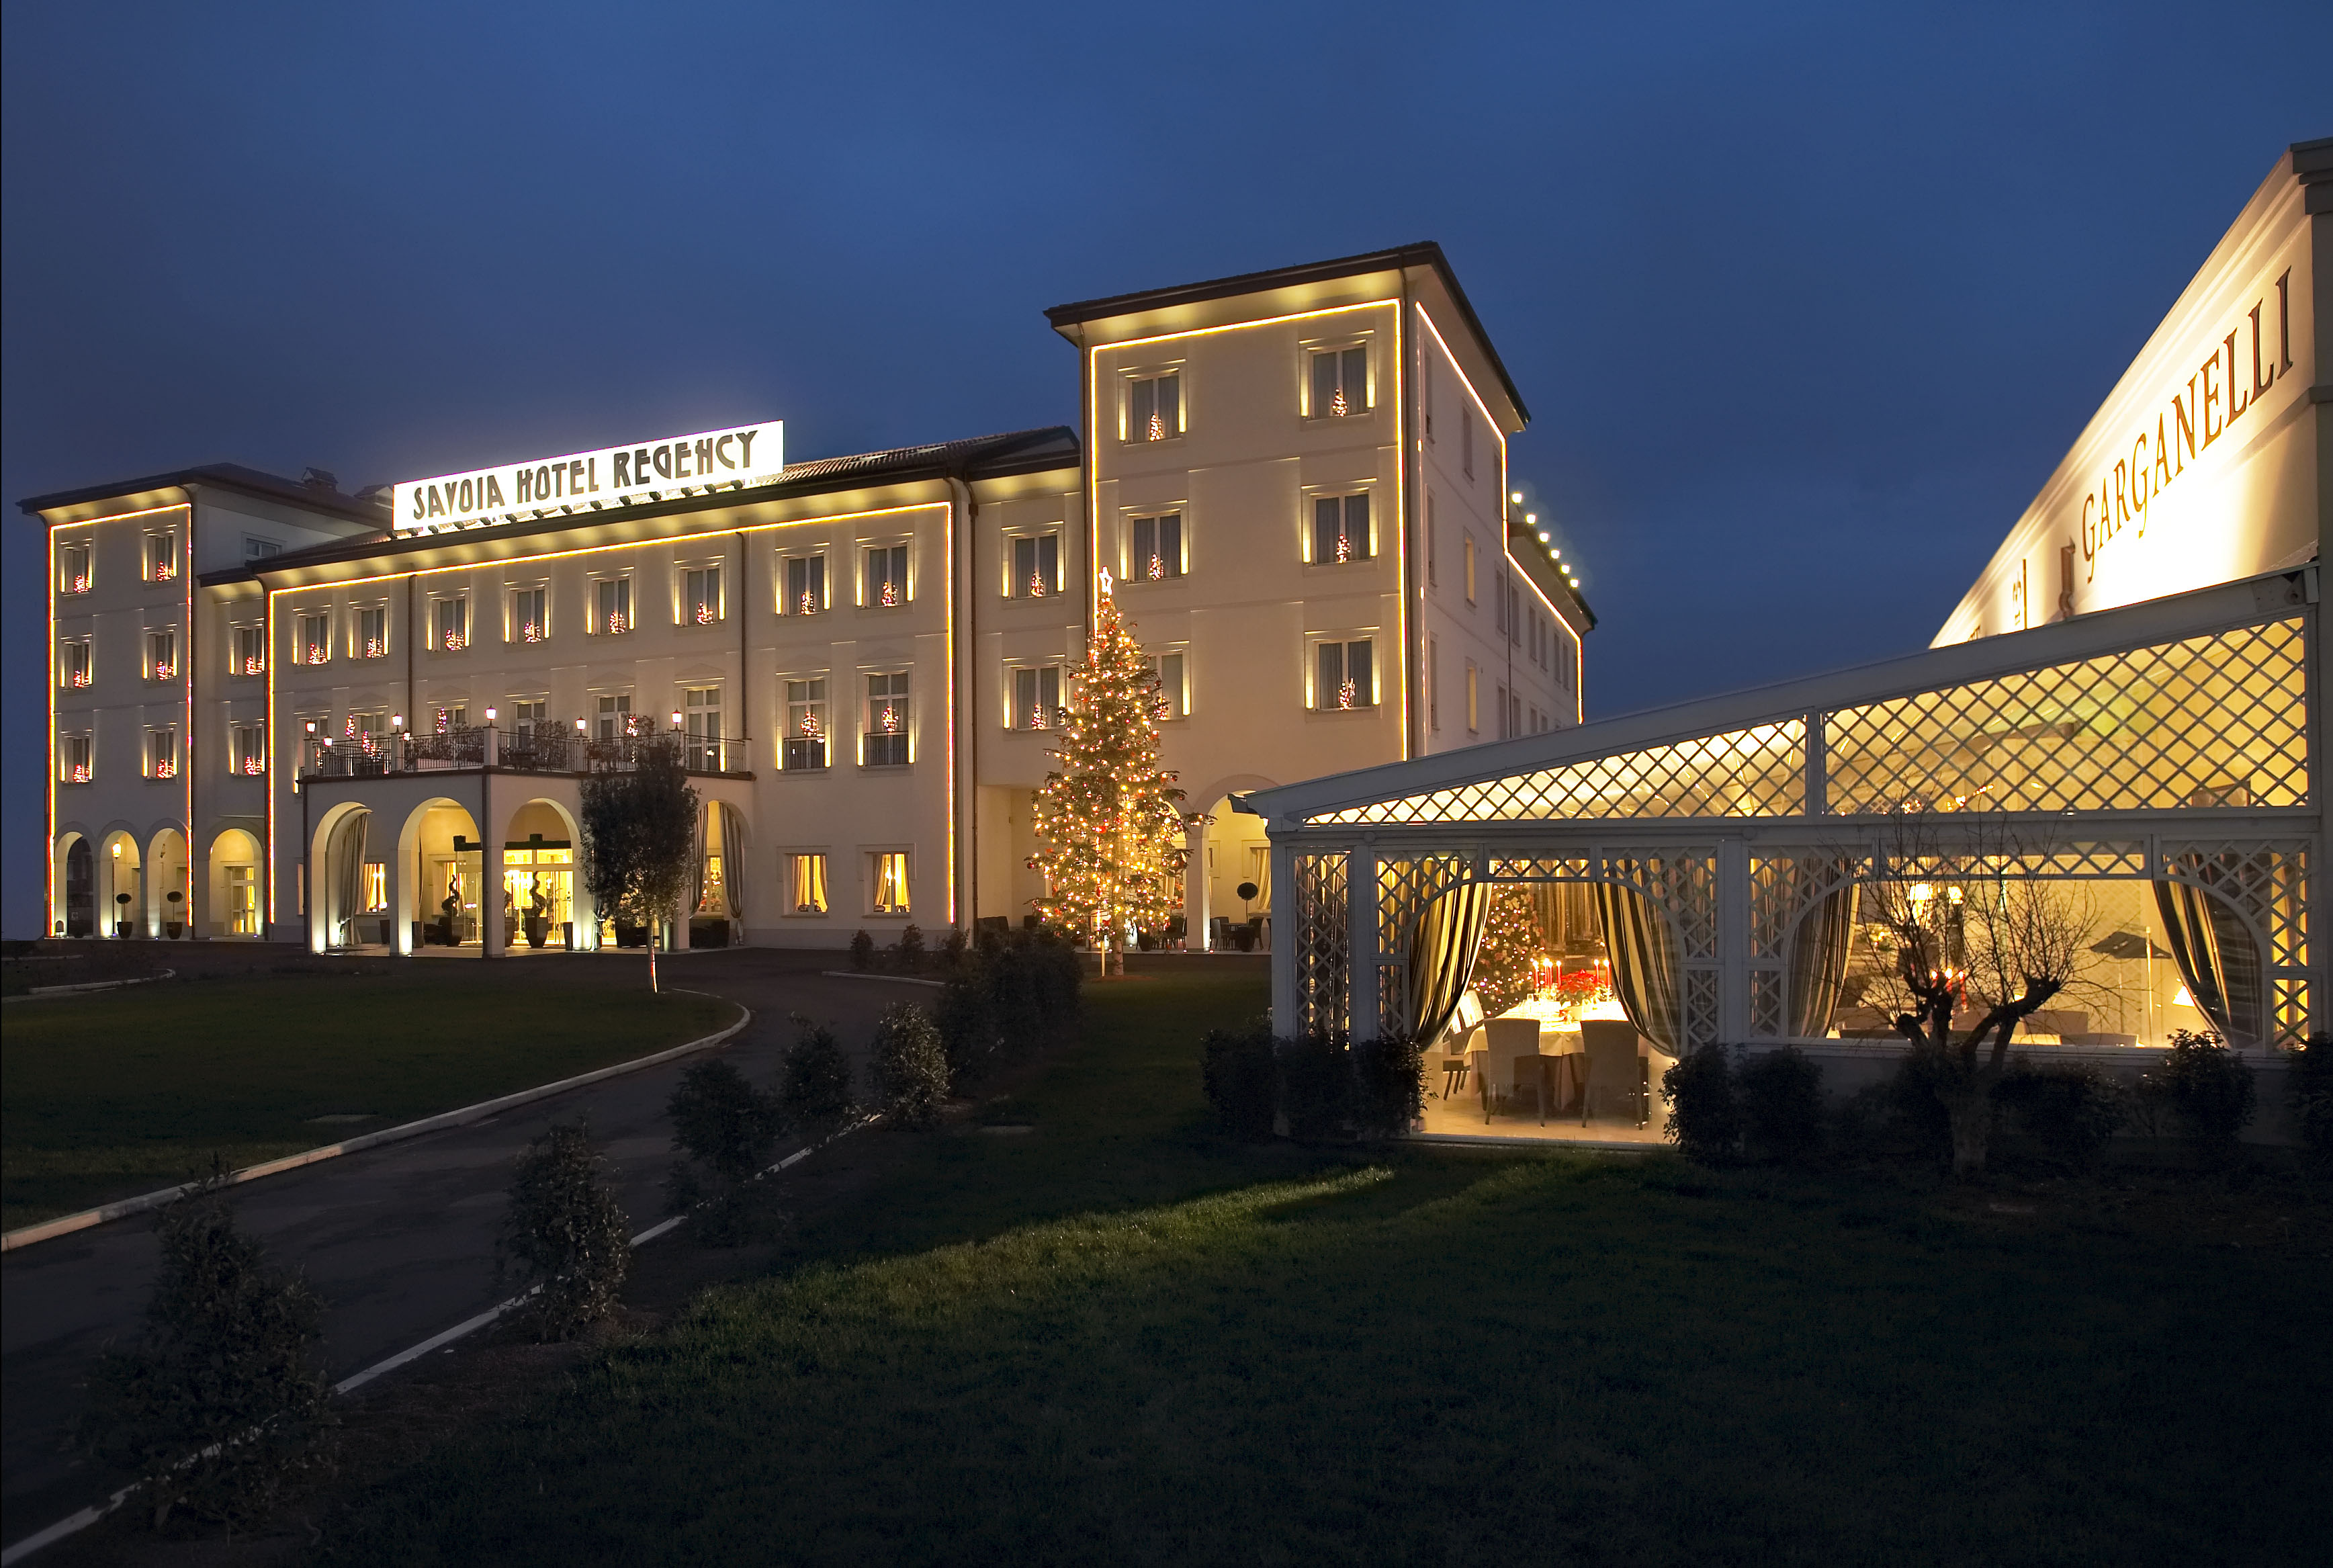 Savoia Hotel Regency image